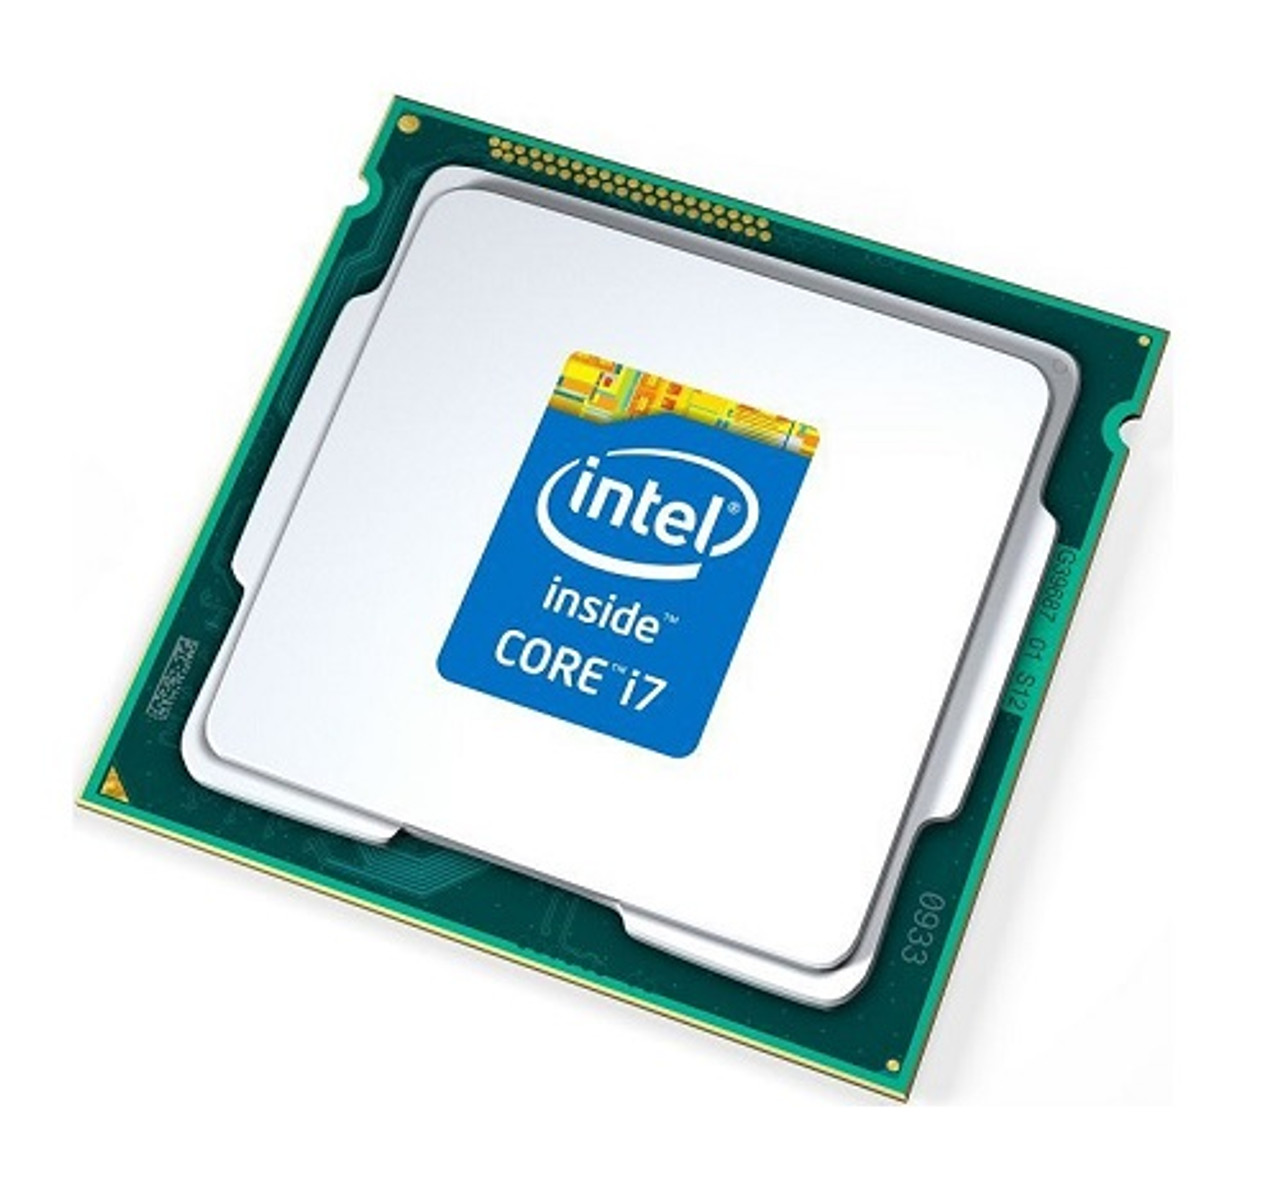 Intel Core i7-2720QM SR014 2.20GHZ